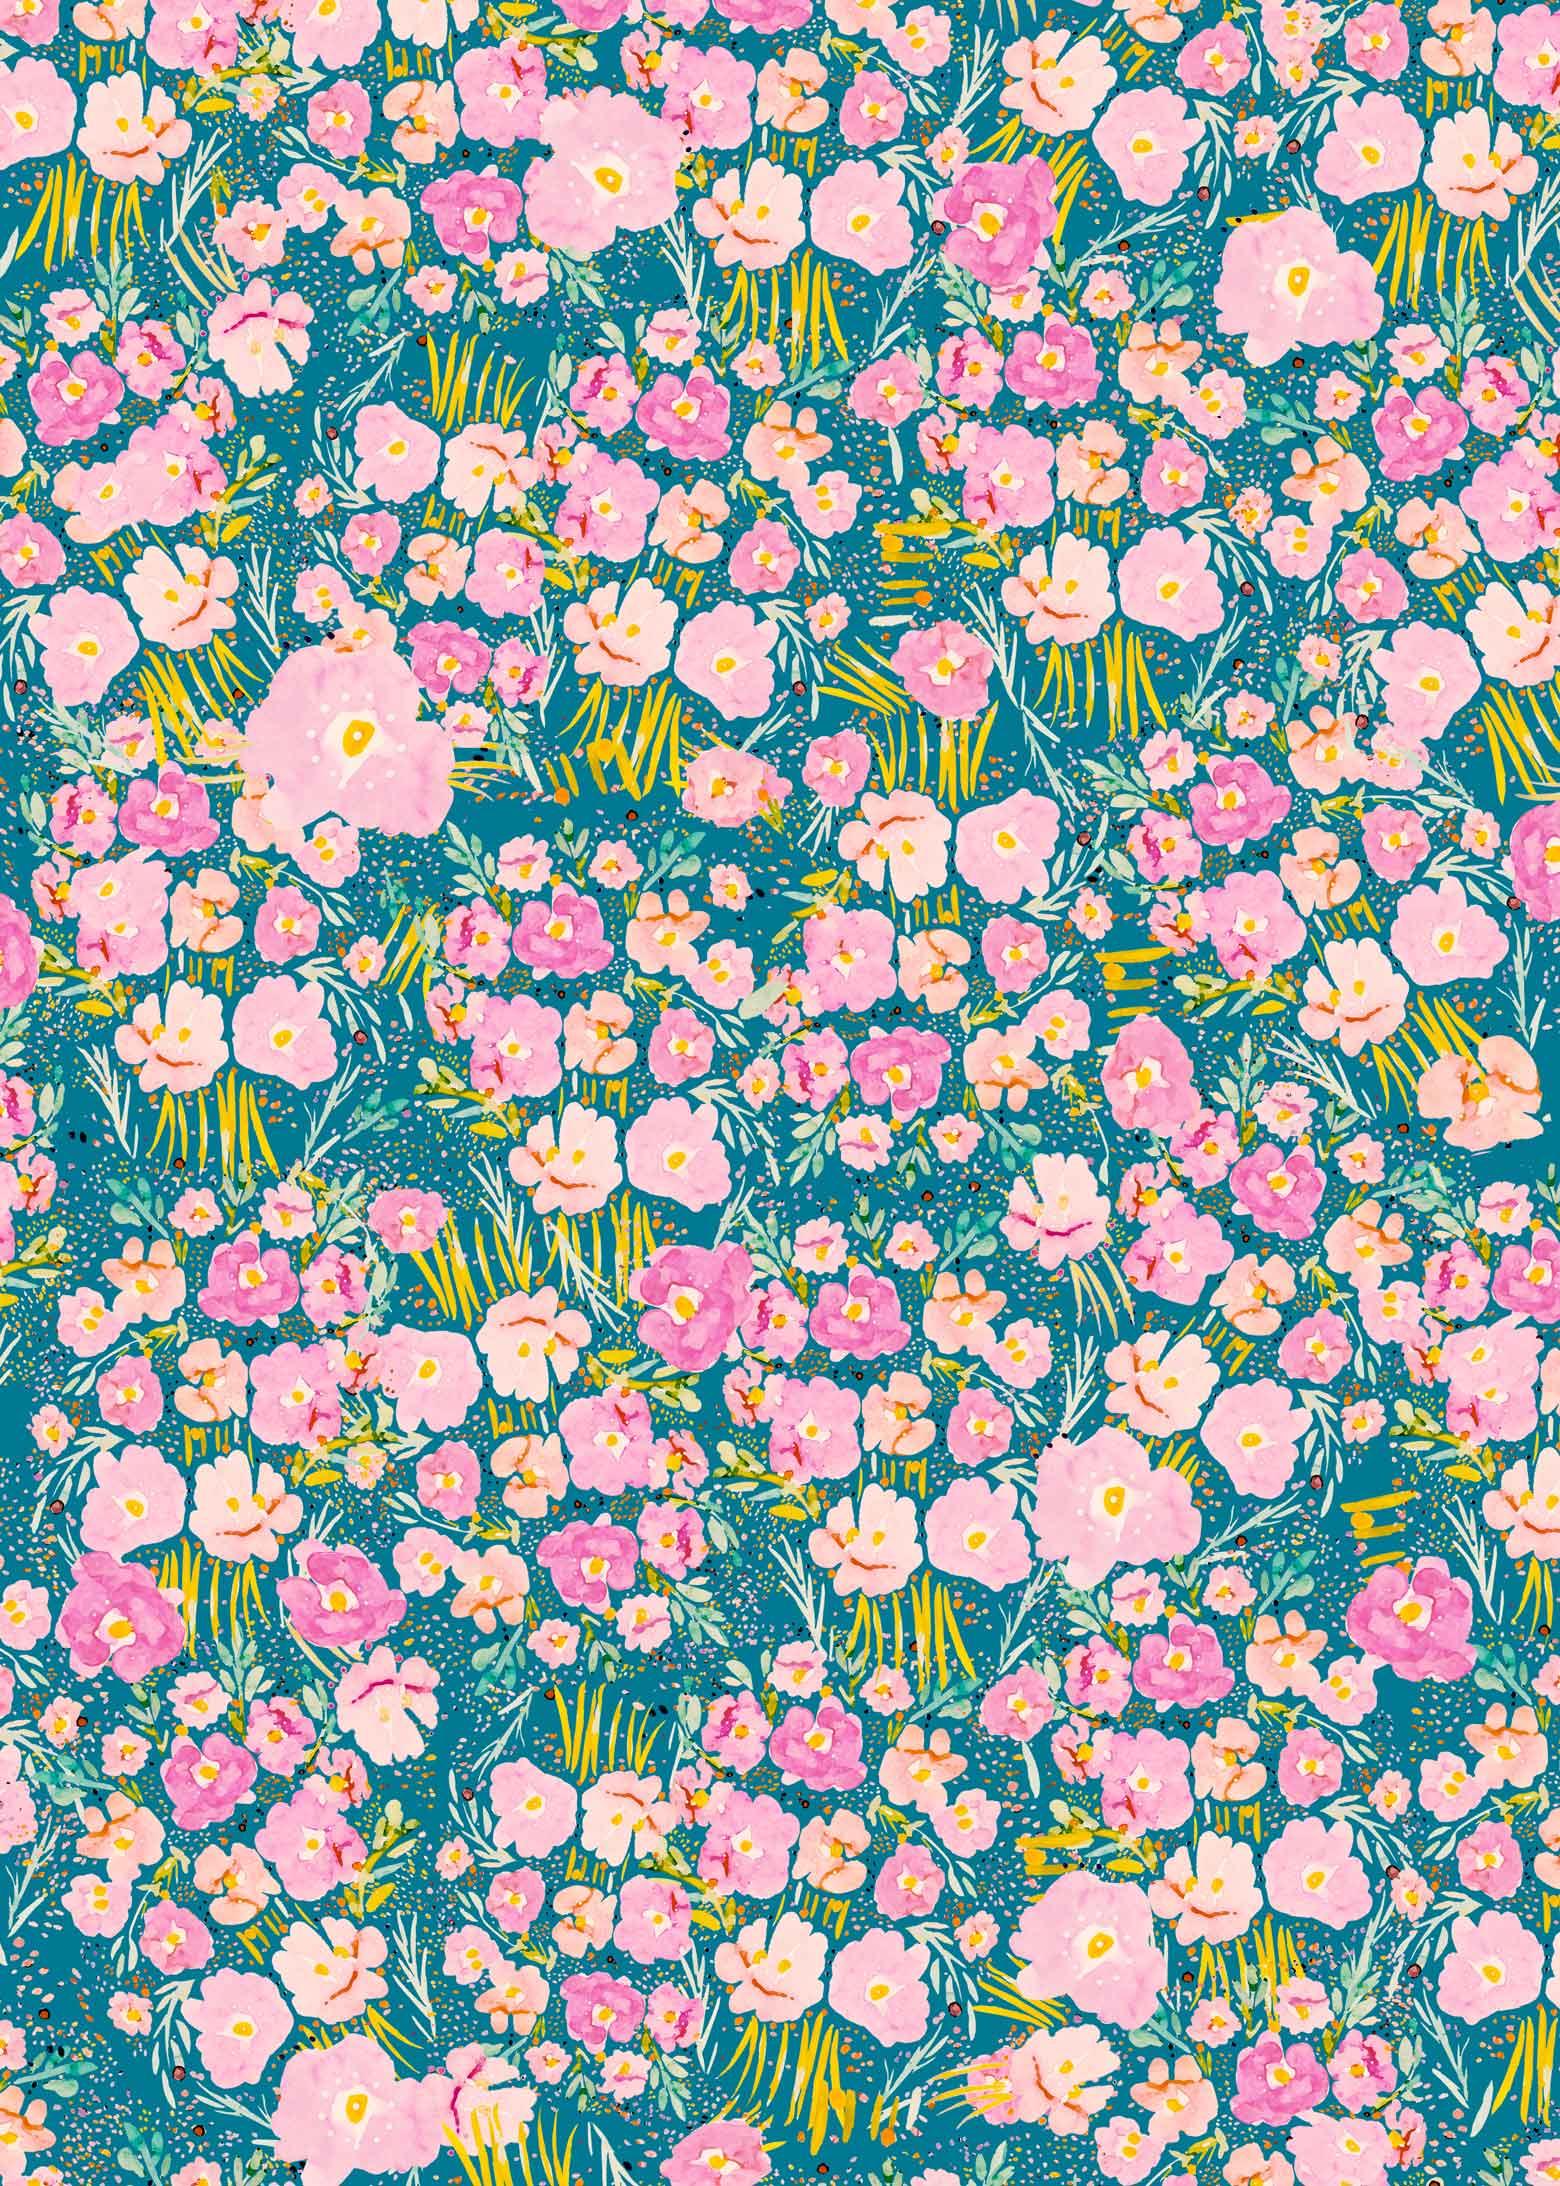 CUTE FLOWERS || Original Print